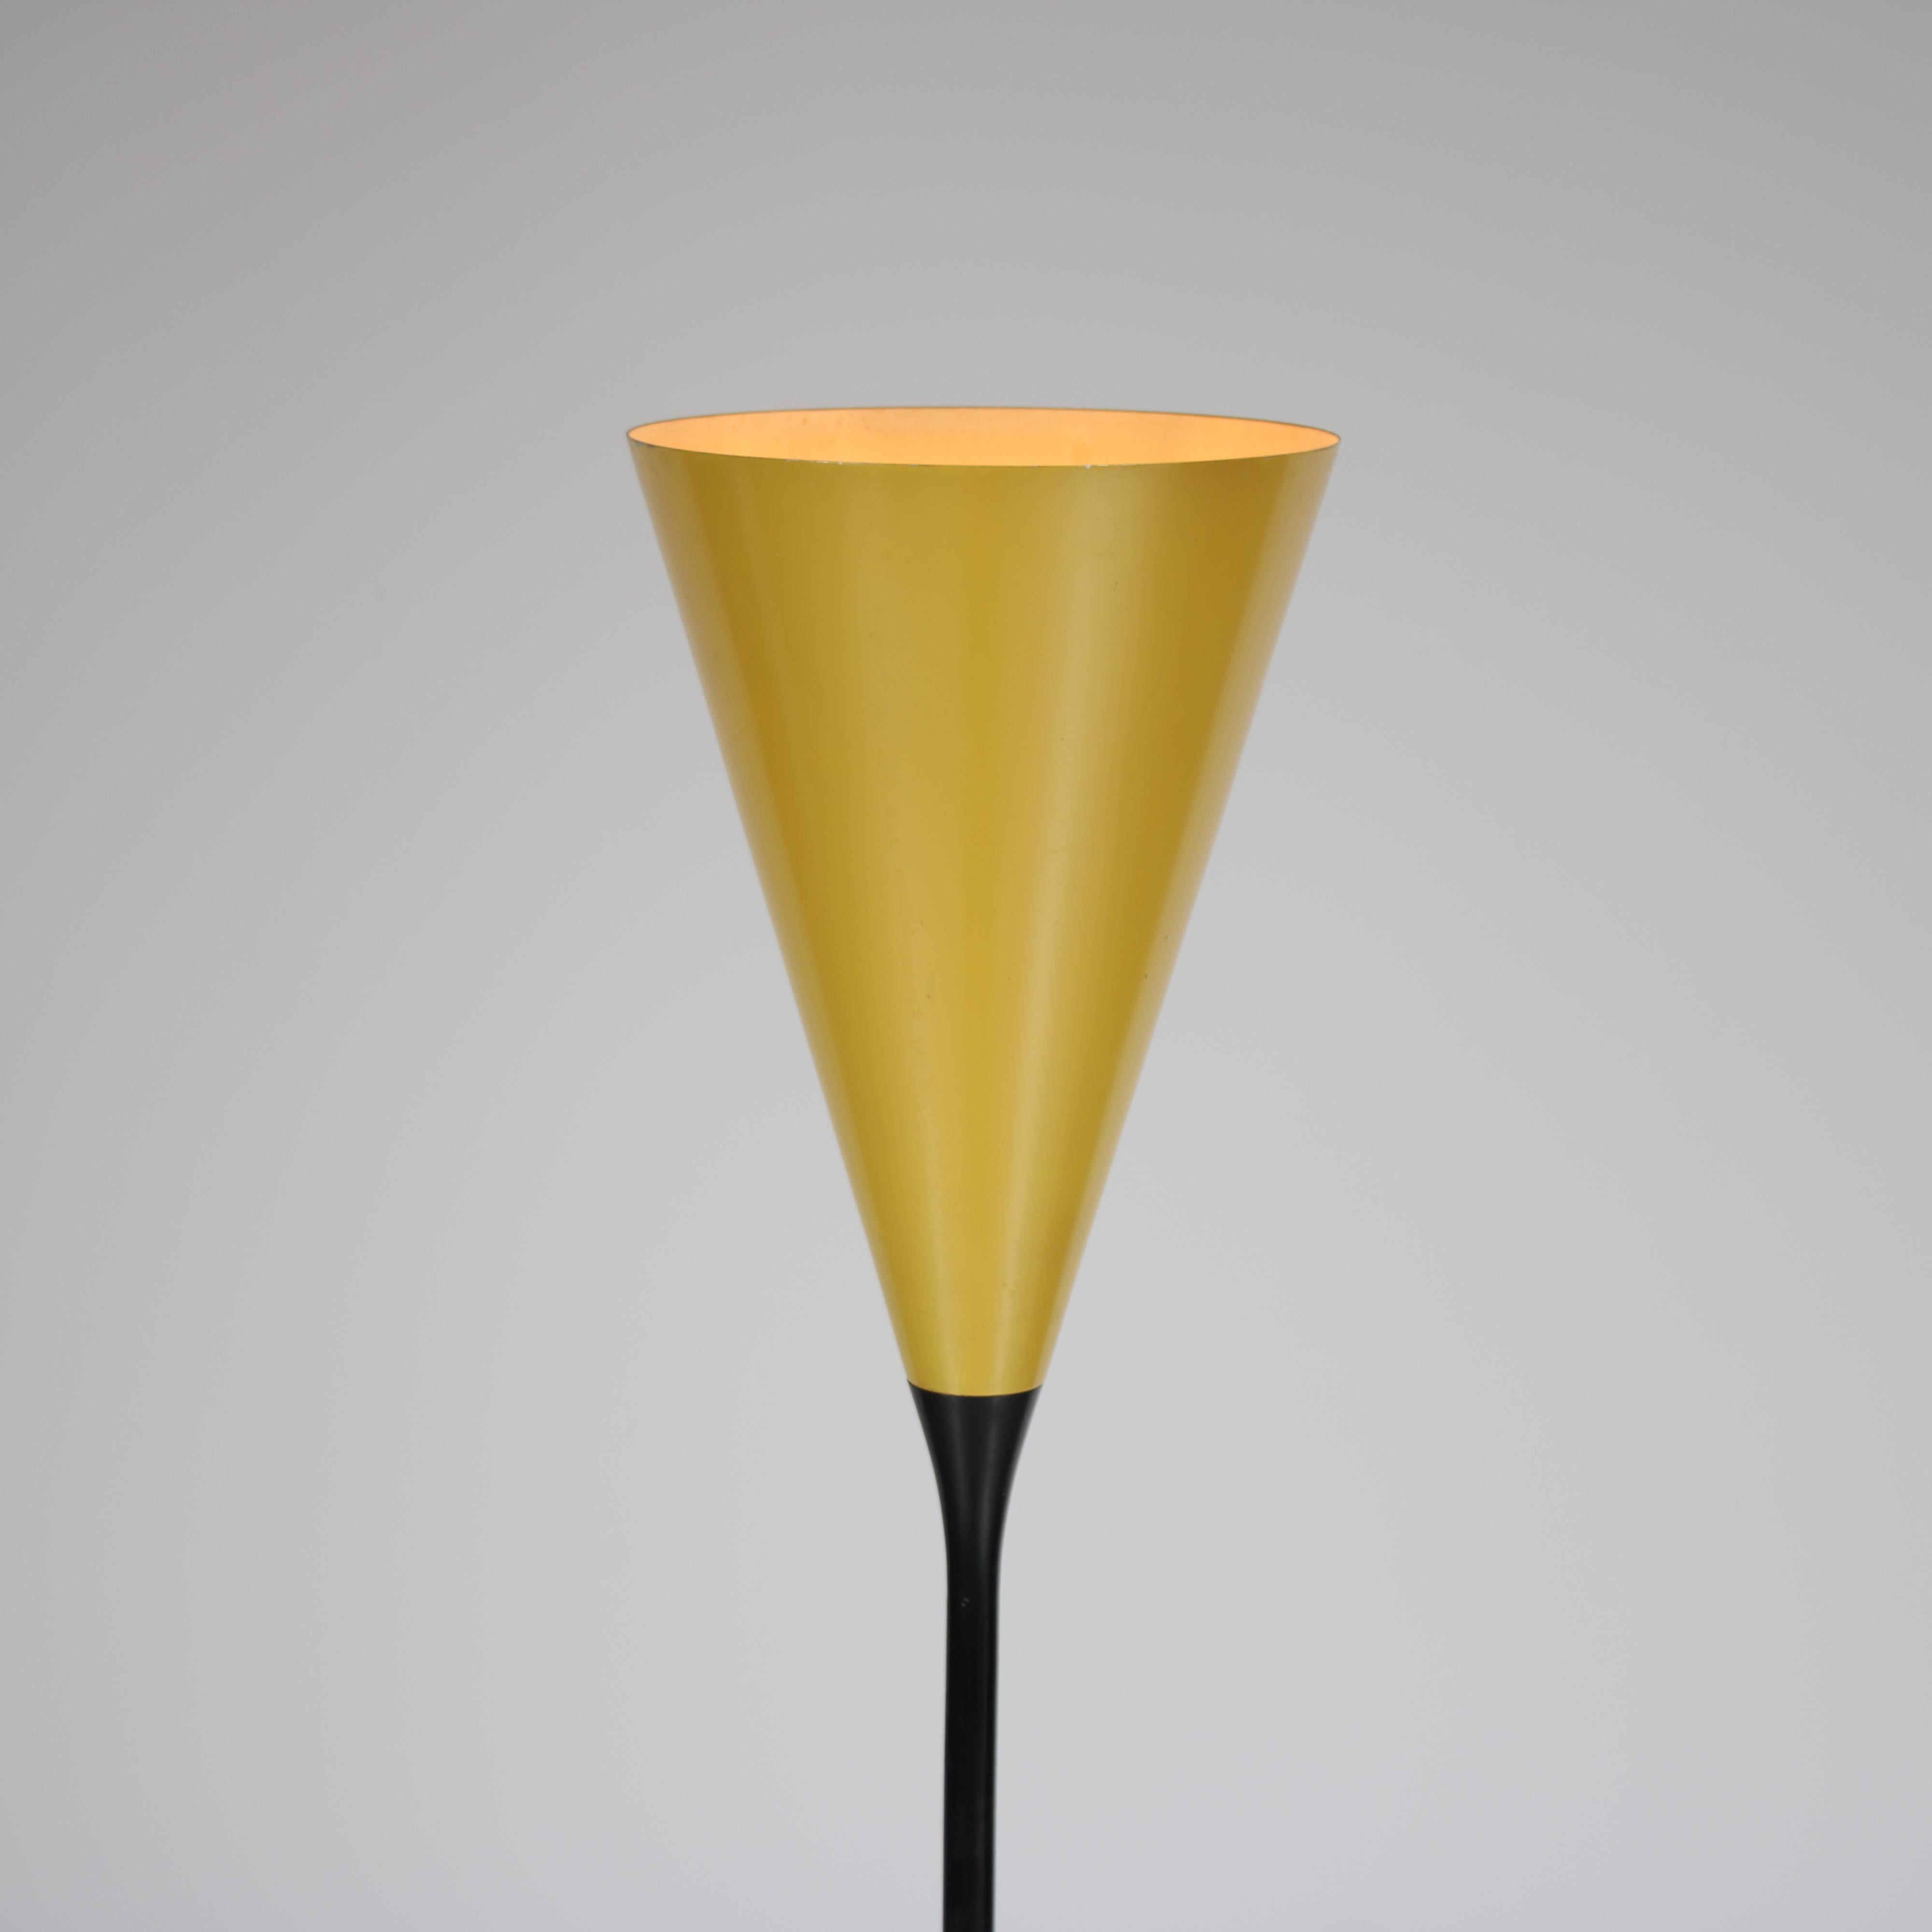 Gino Sarfatti Floor Lamp for Arteluce, Italy 1950 For Sale 5